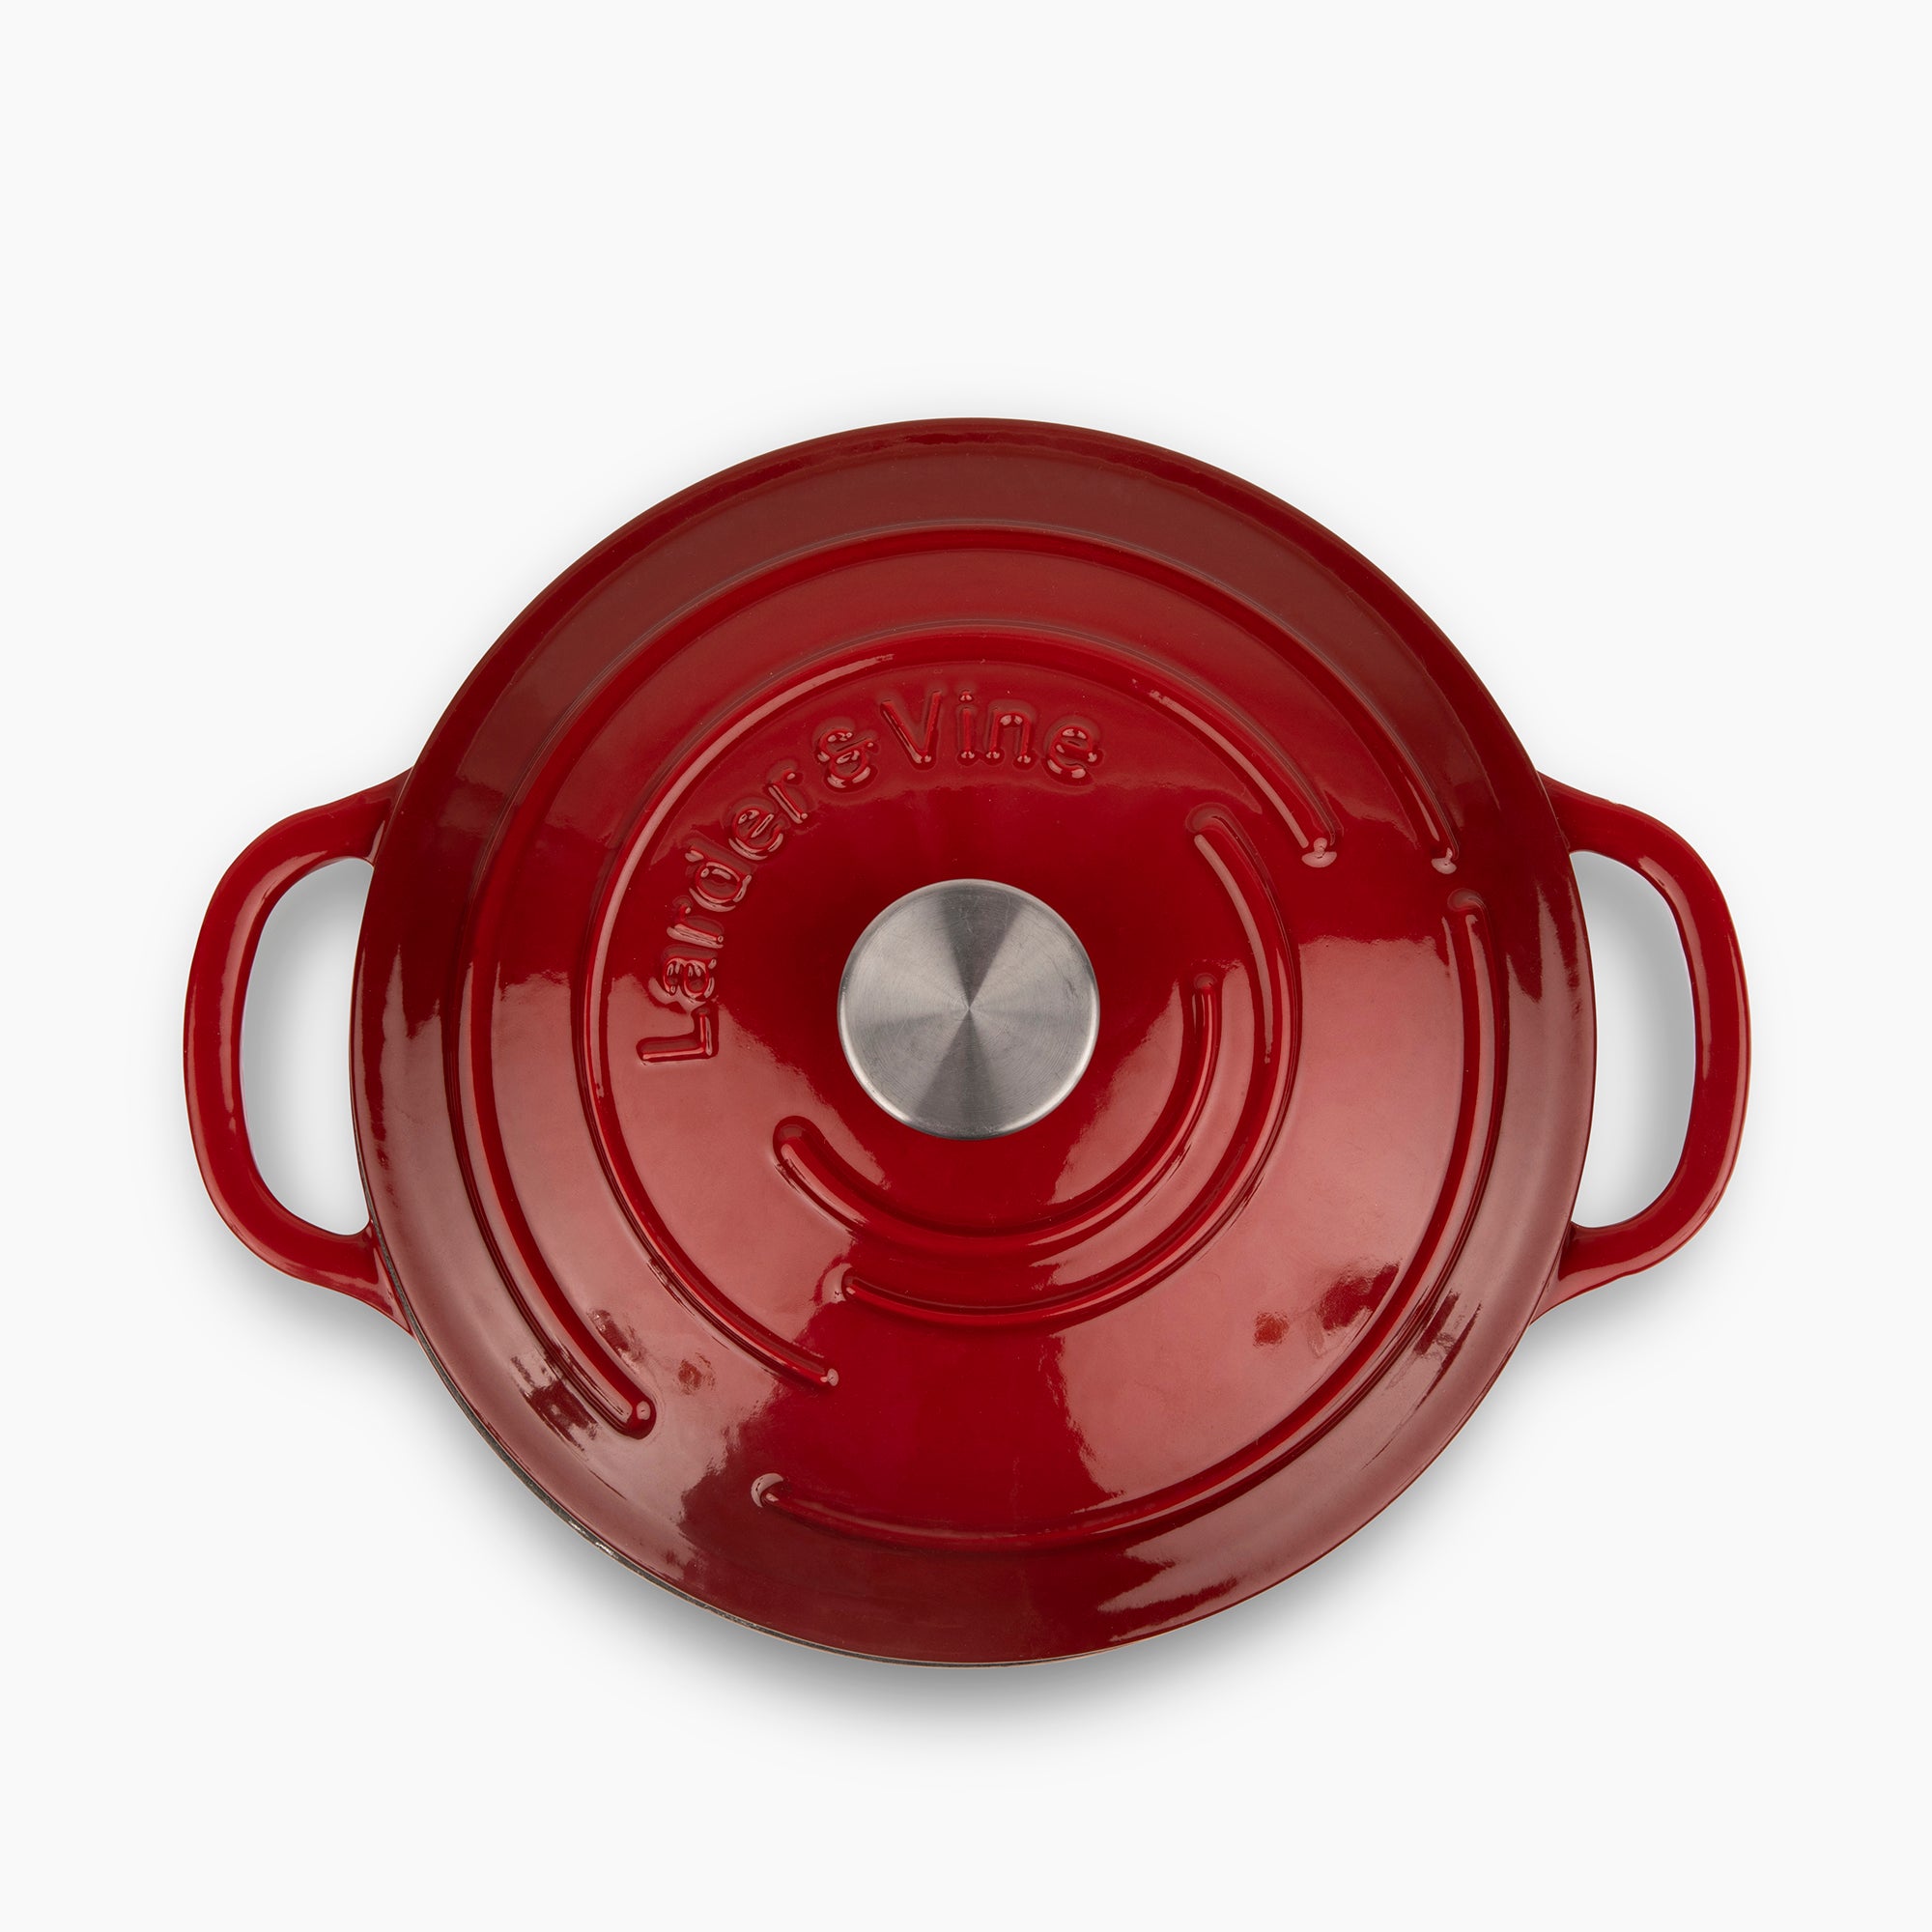 Larder & Vine 9 Piece Enameled Cast Iron Cookware Set, Oven Safe and  Compatible with all Cooktops – includes 3.6 Qt Braiser, 5.7 QT and 8 QT  Dutch